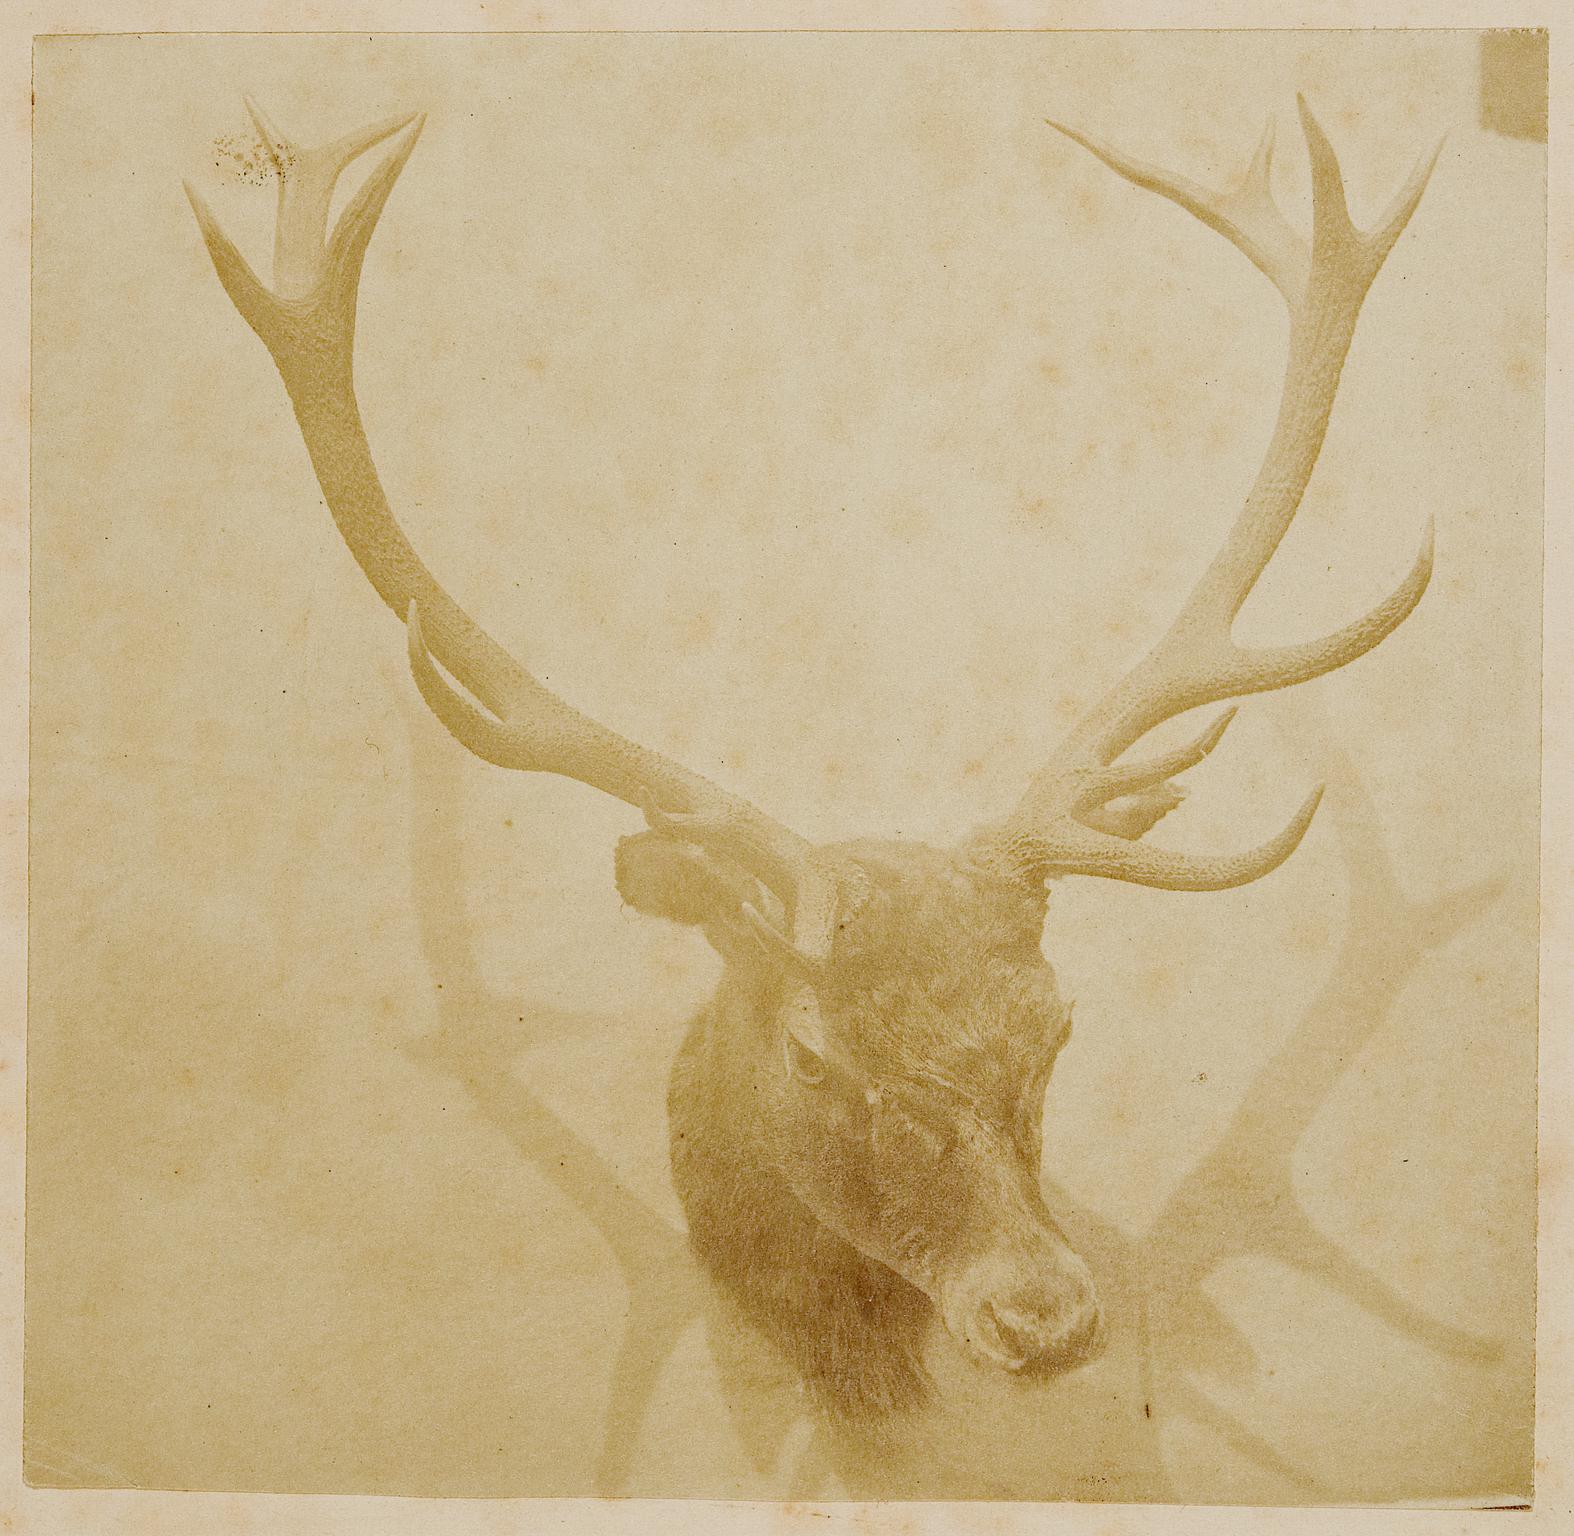 Mounted head of deer, photograph